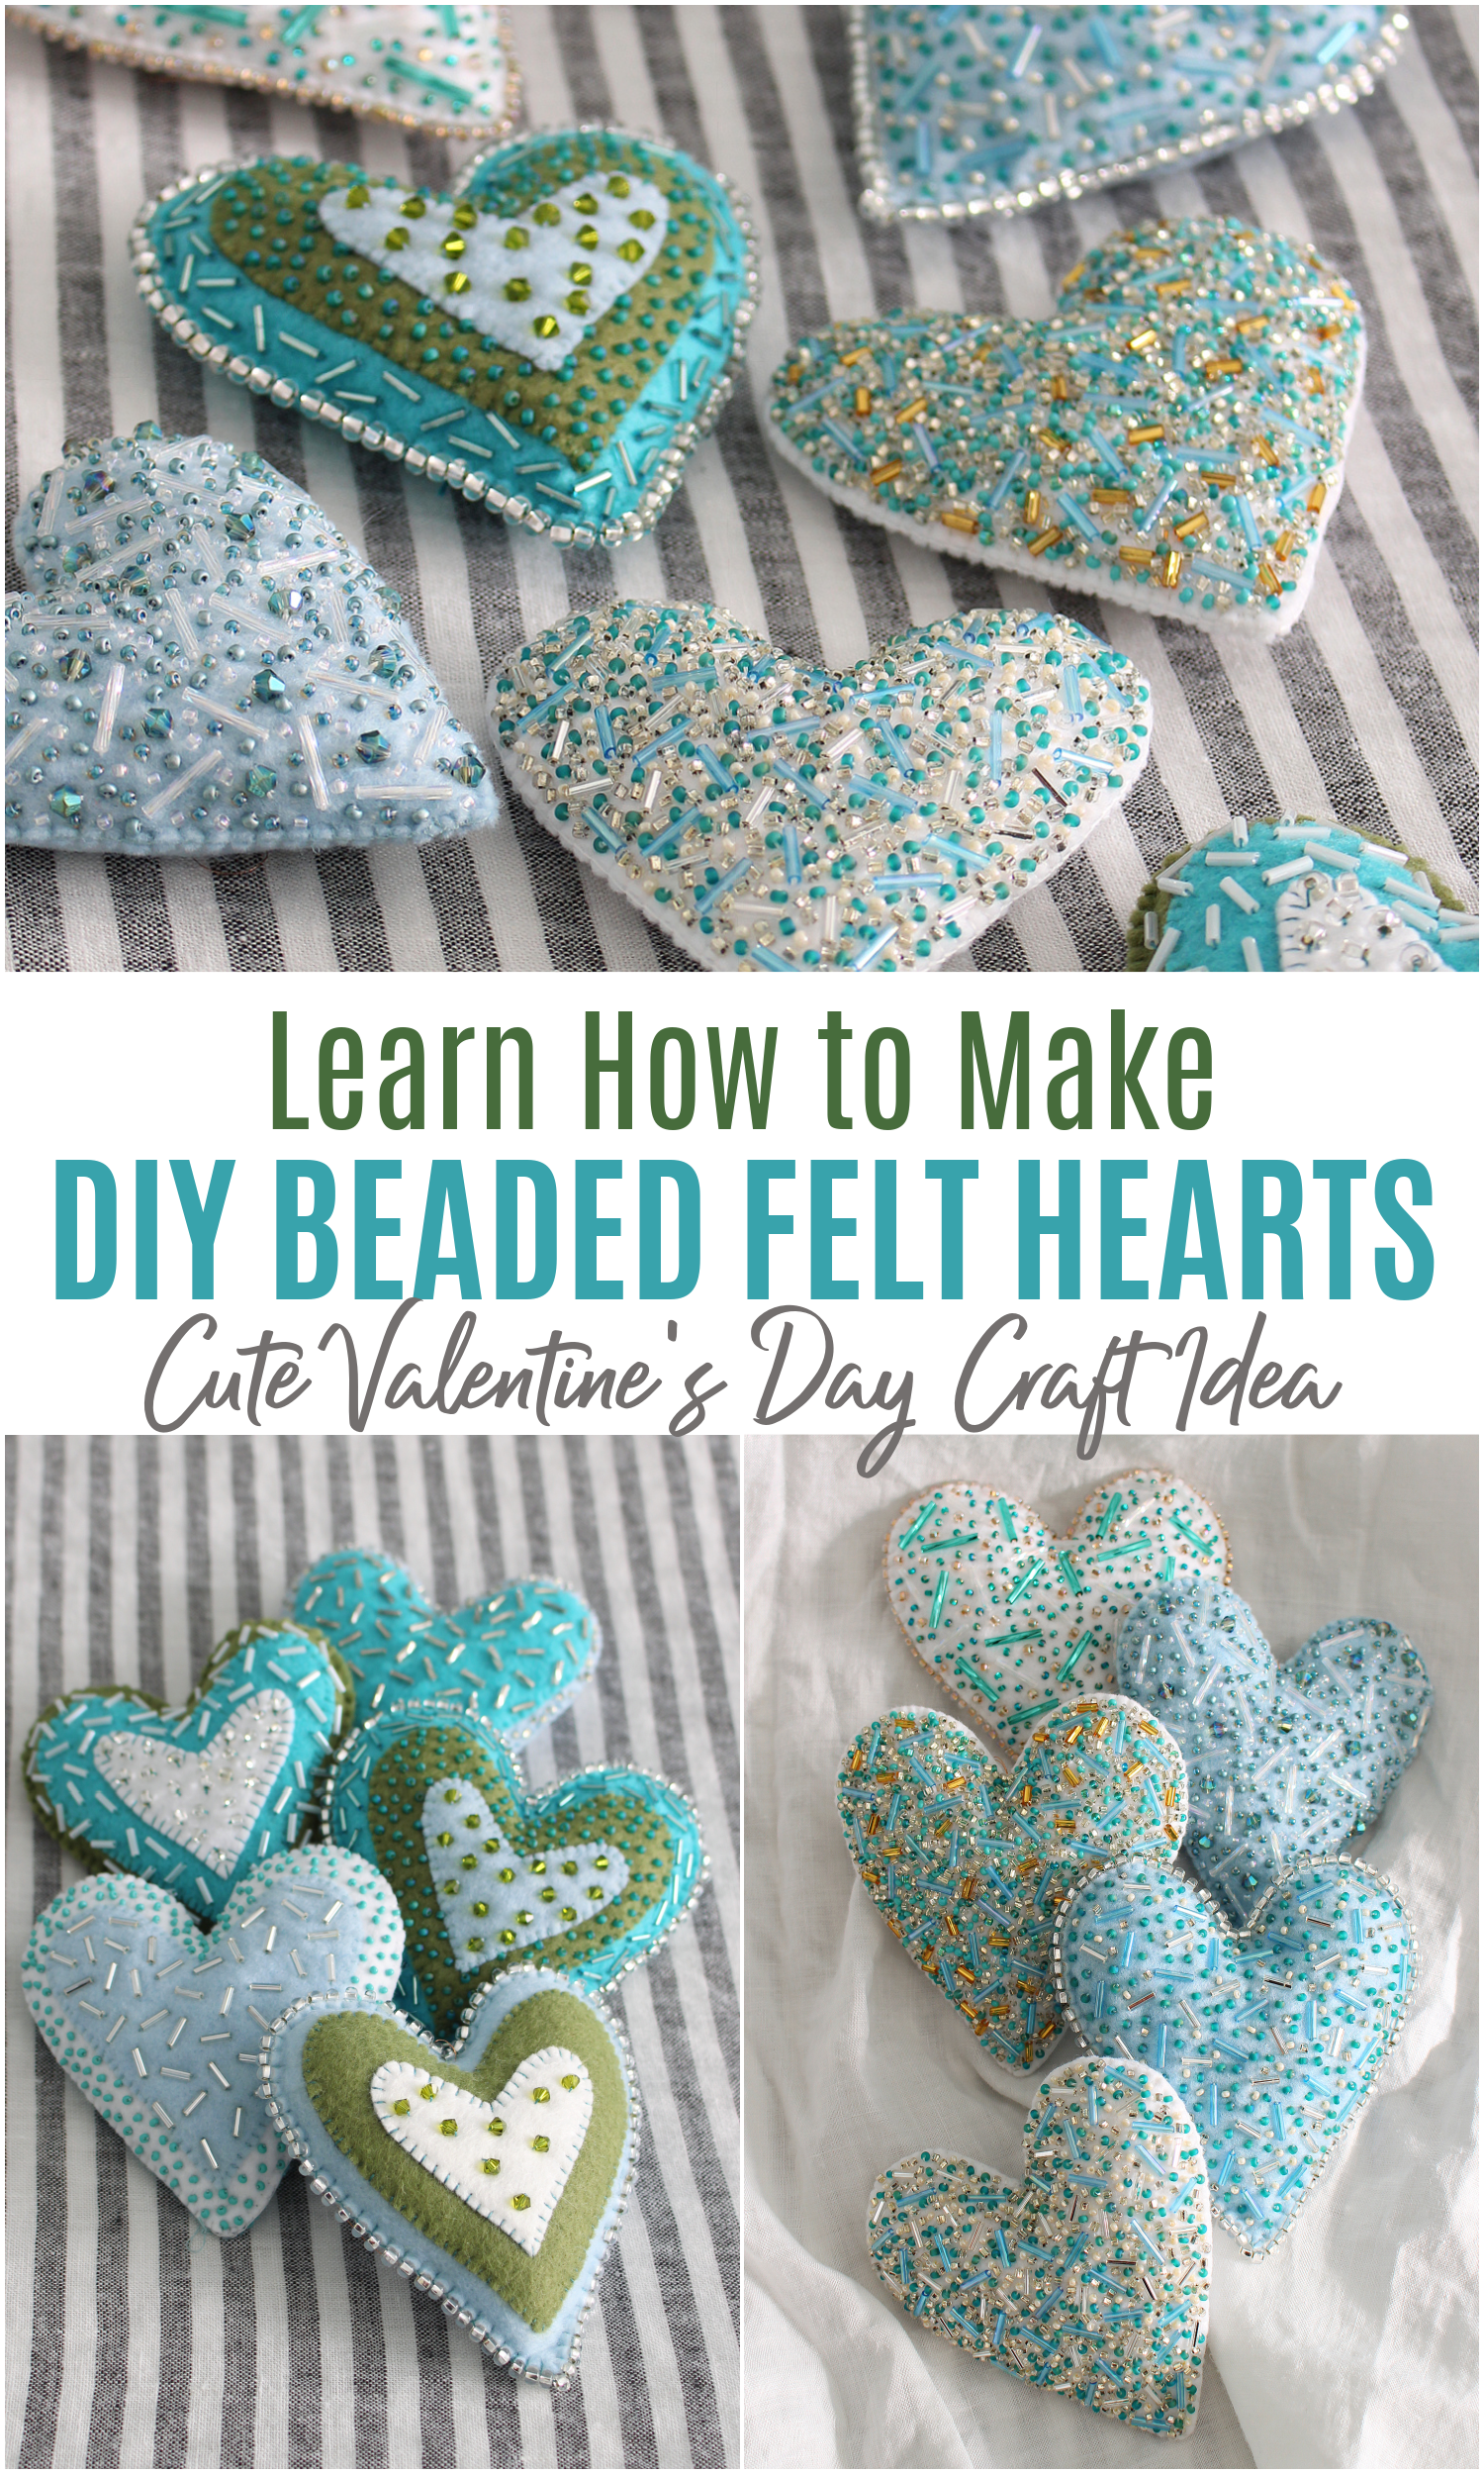 Cute Valentine's Day Craft Idea for Adults: DIY Beaded Felt Heart Ornaments